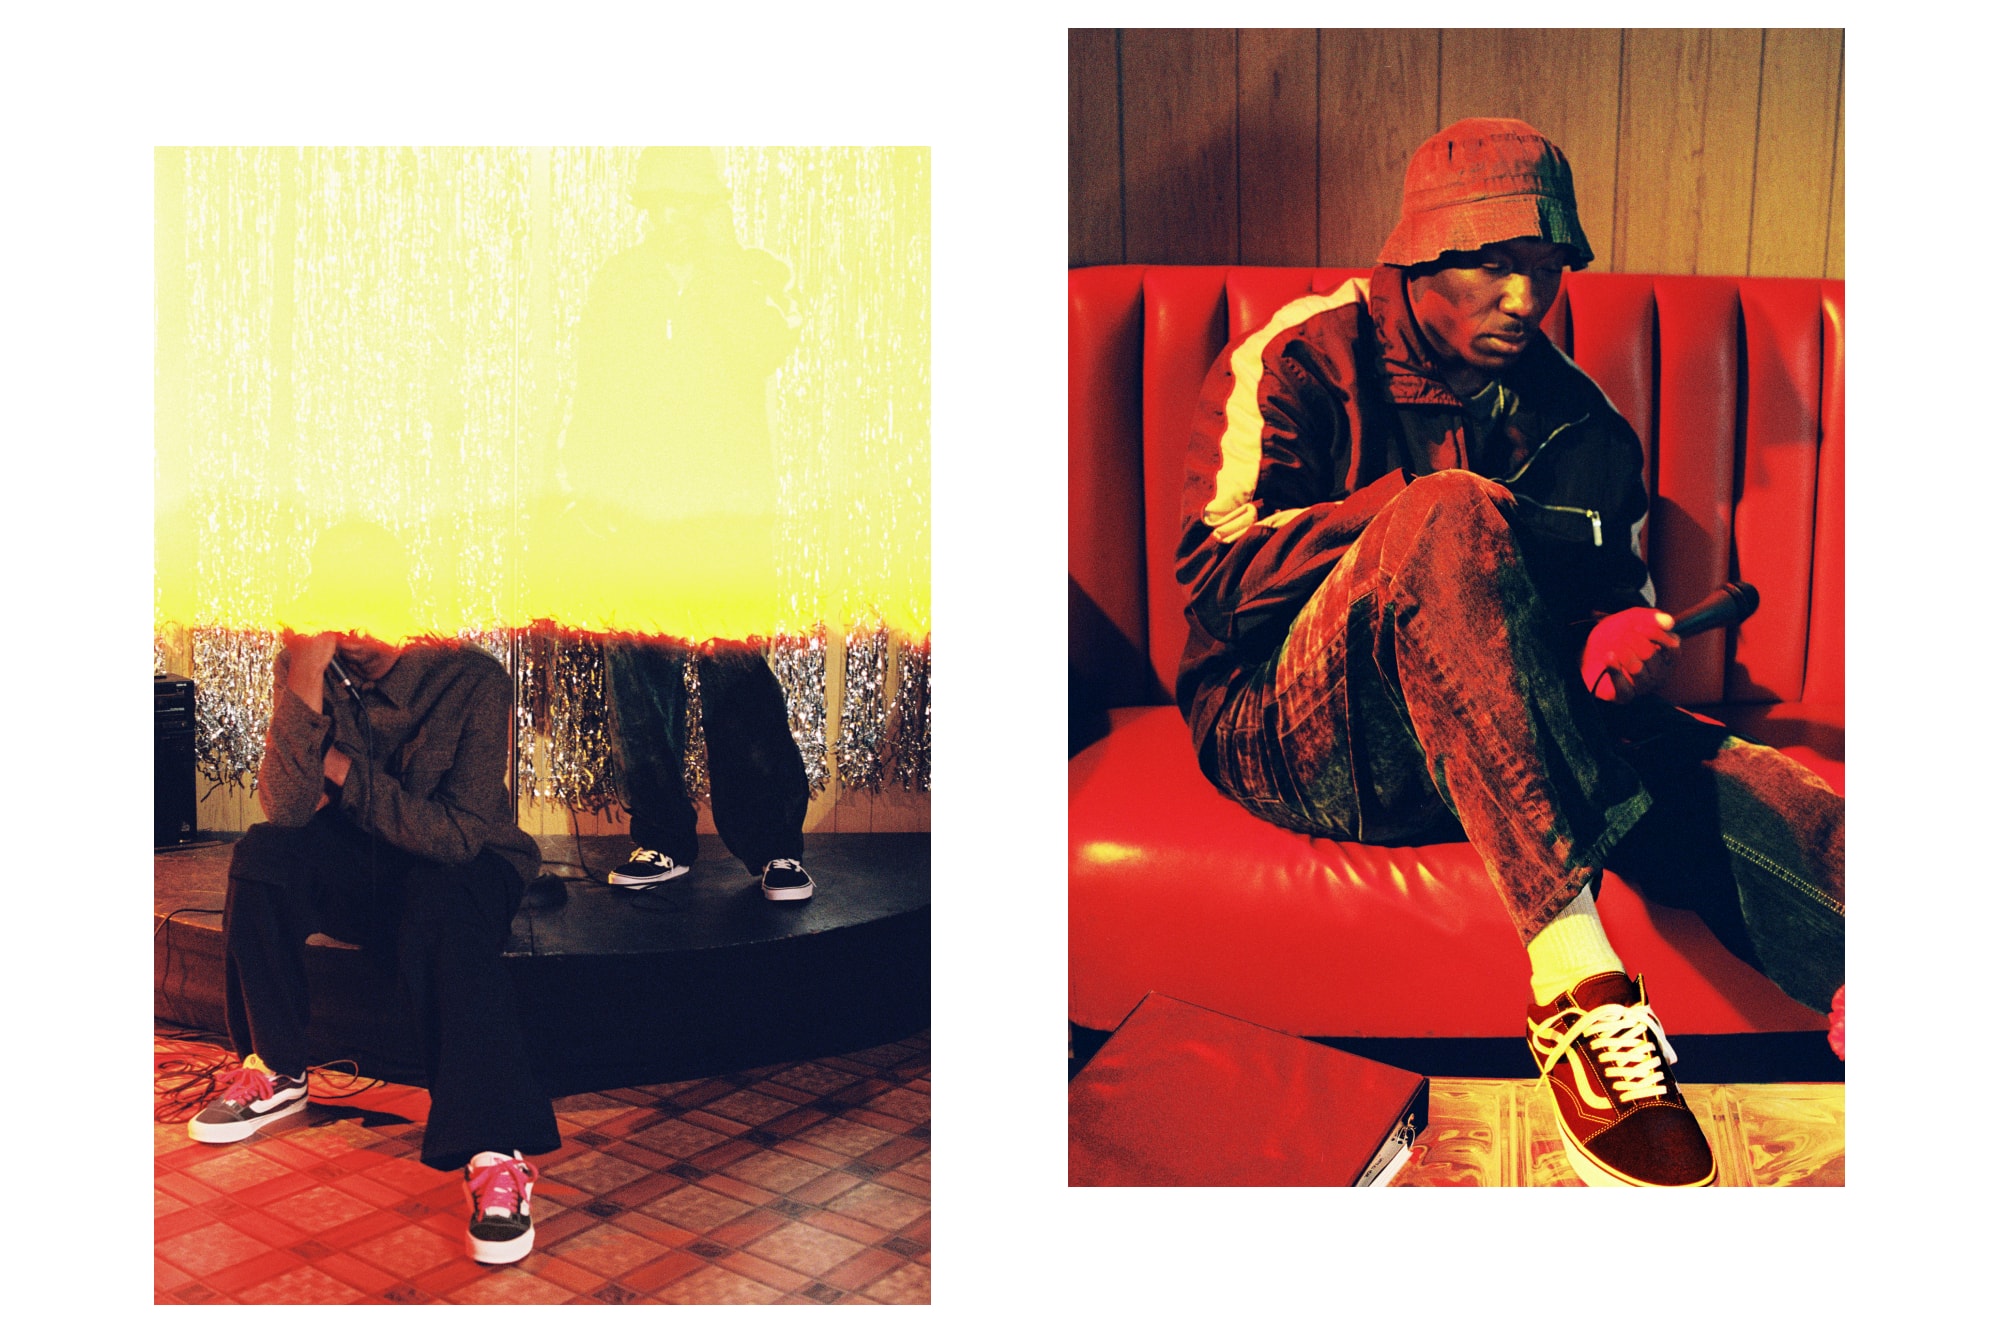 Hip-Hop Duo Paris Texas Vans Knu Skool and Old Skool Sneakers Campaign and Interview 